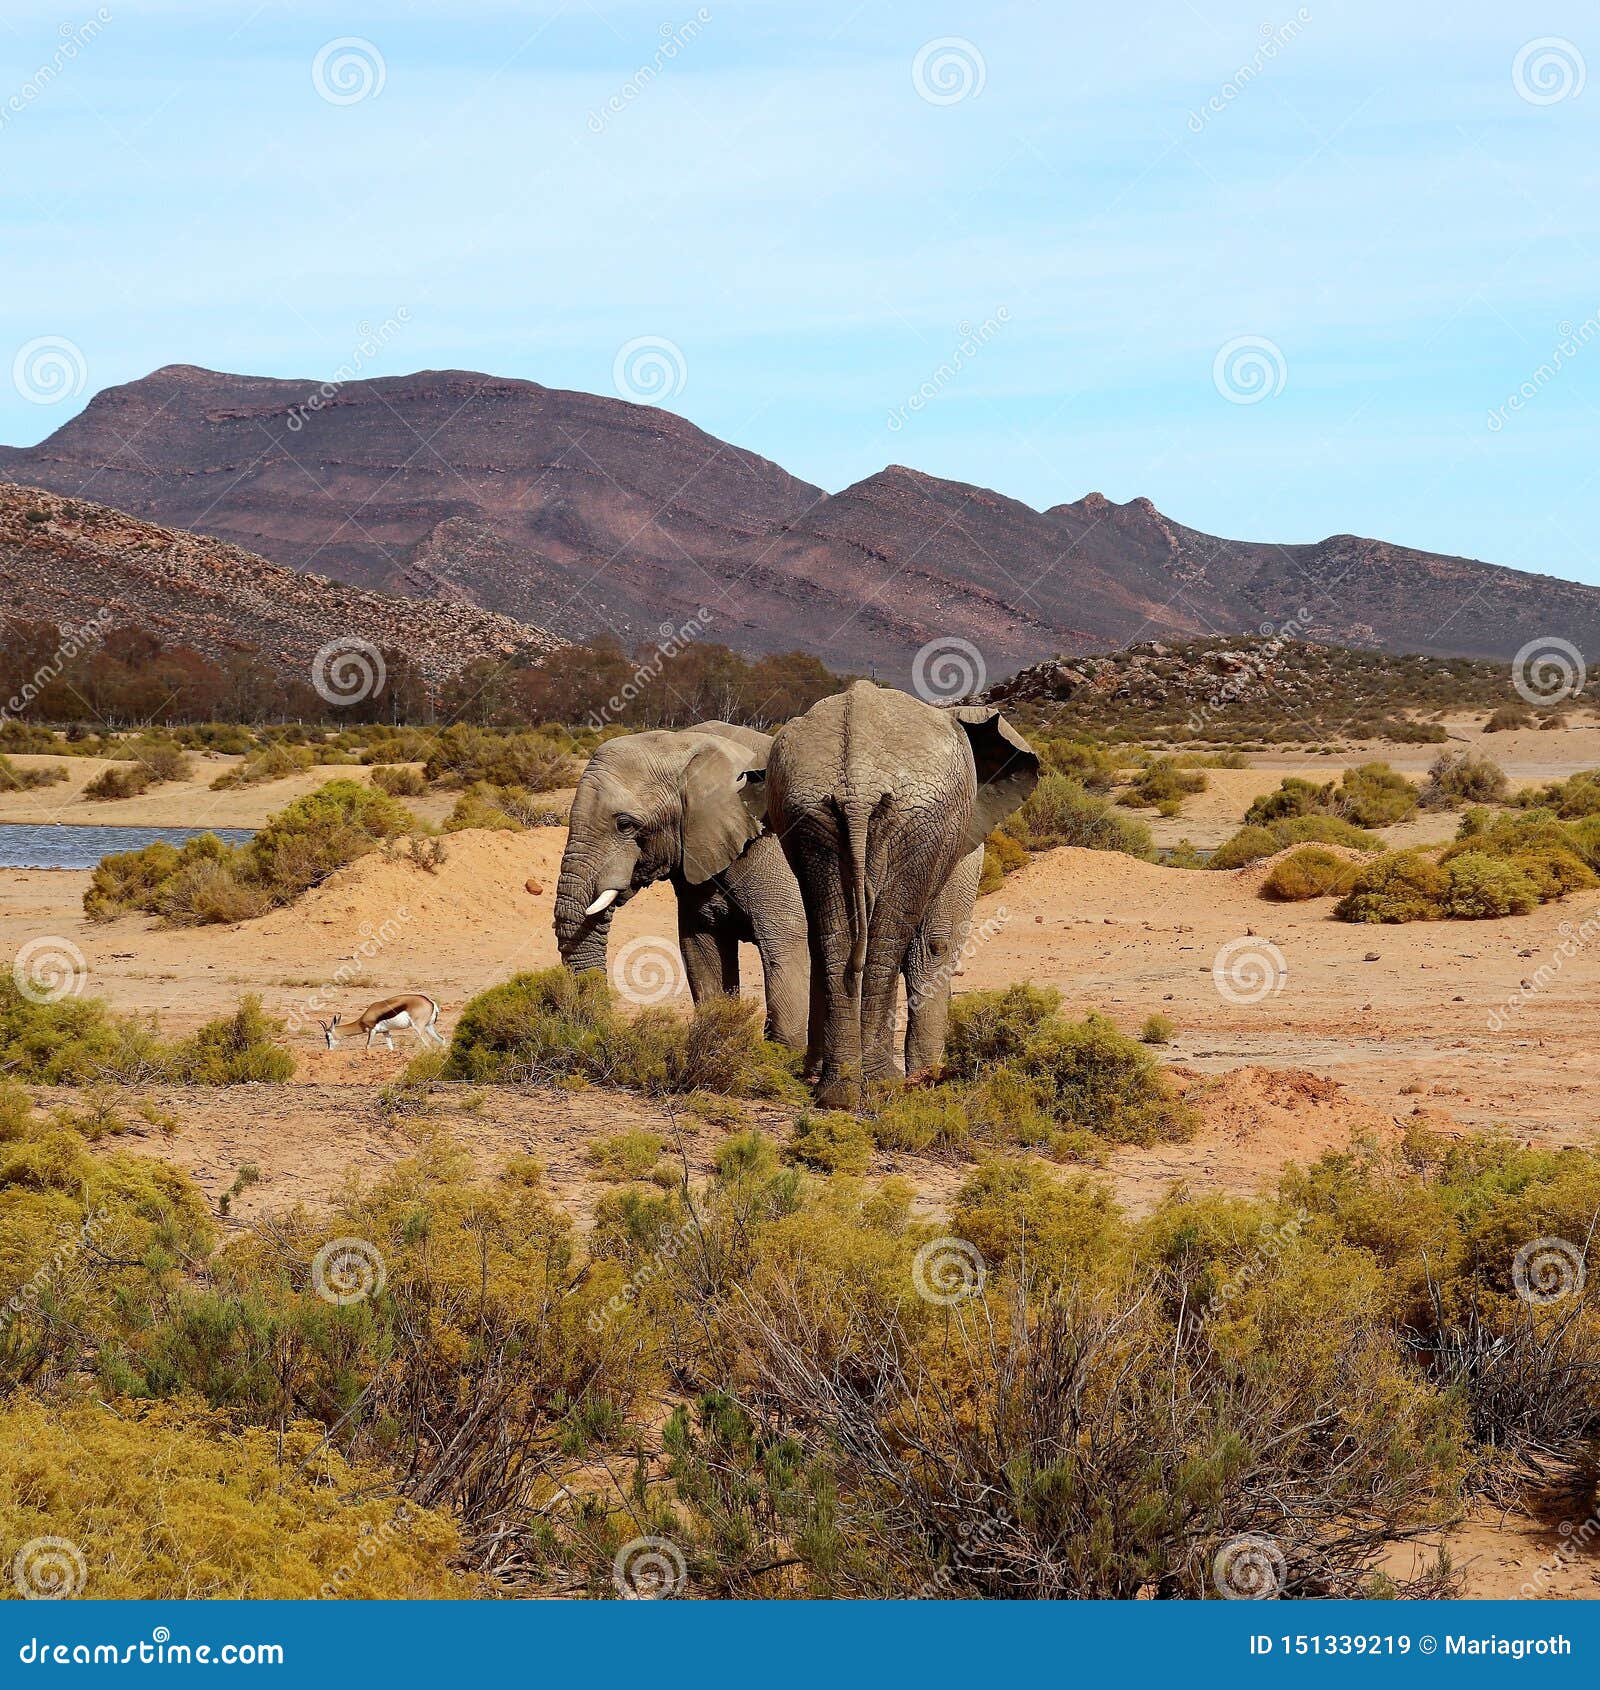 The Elephant is the World`s Largest Living Land Animal Stock Image - Image  of karoo, largest: 151339219